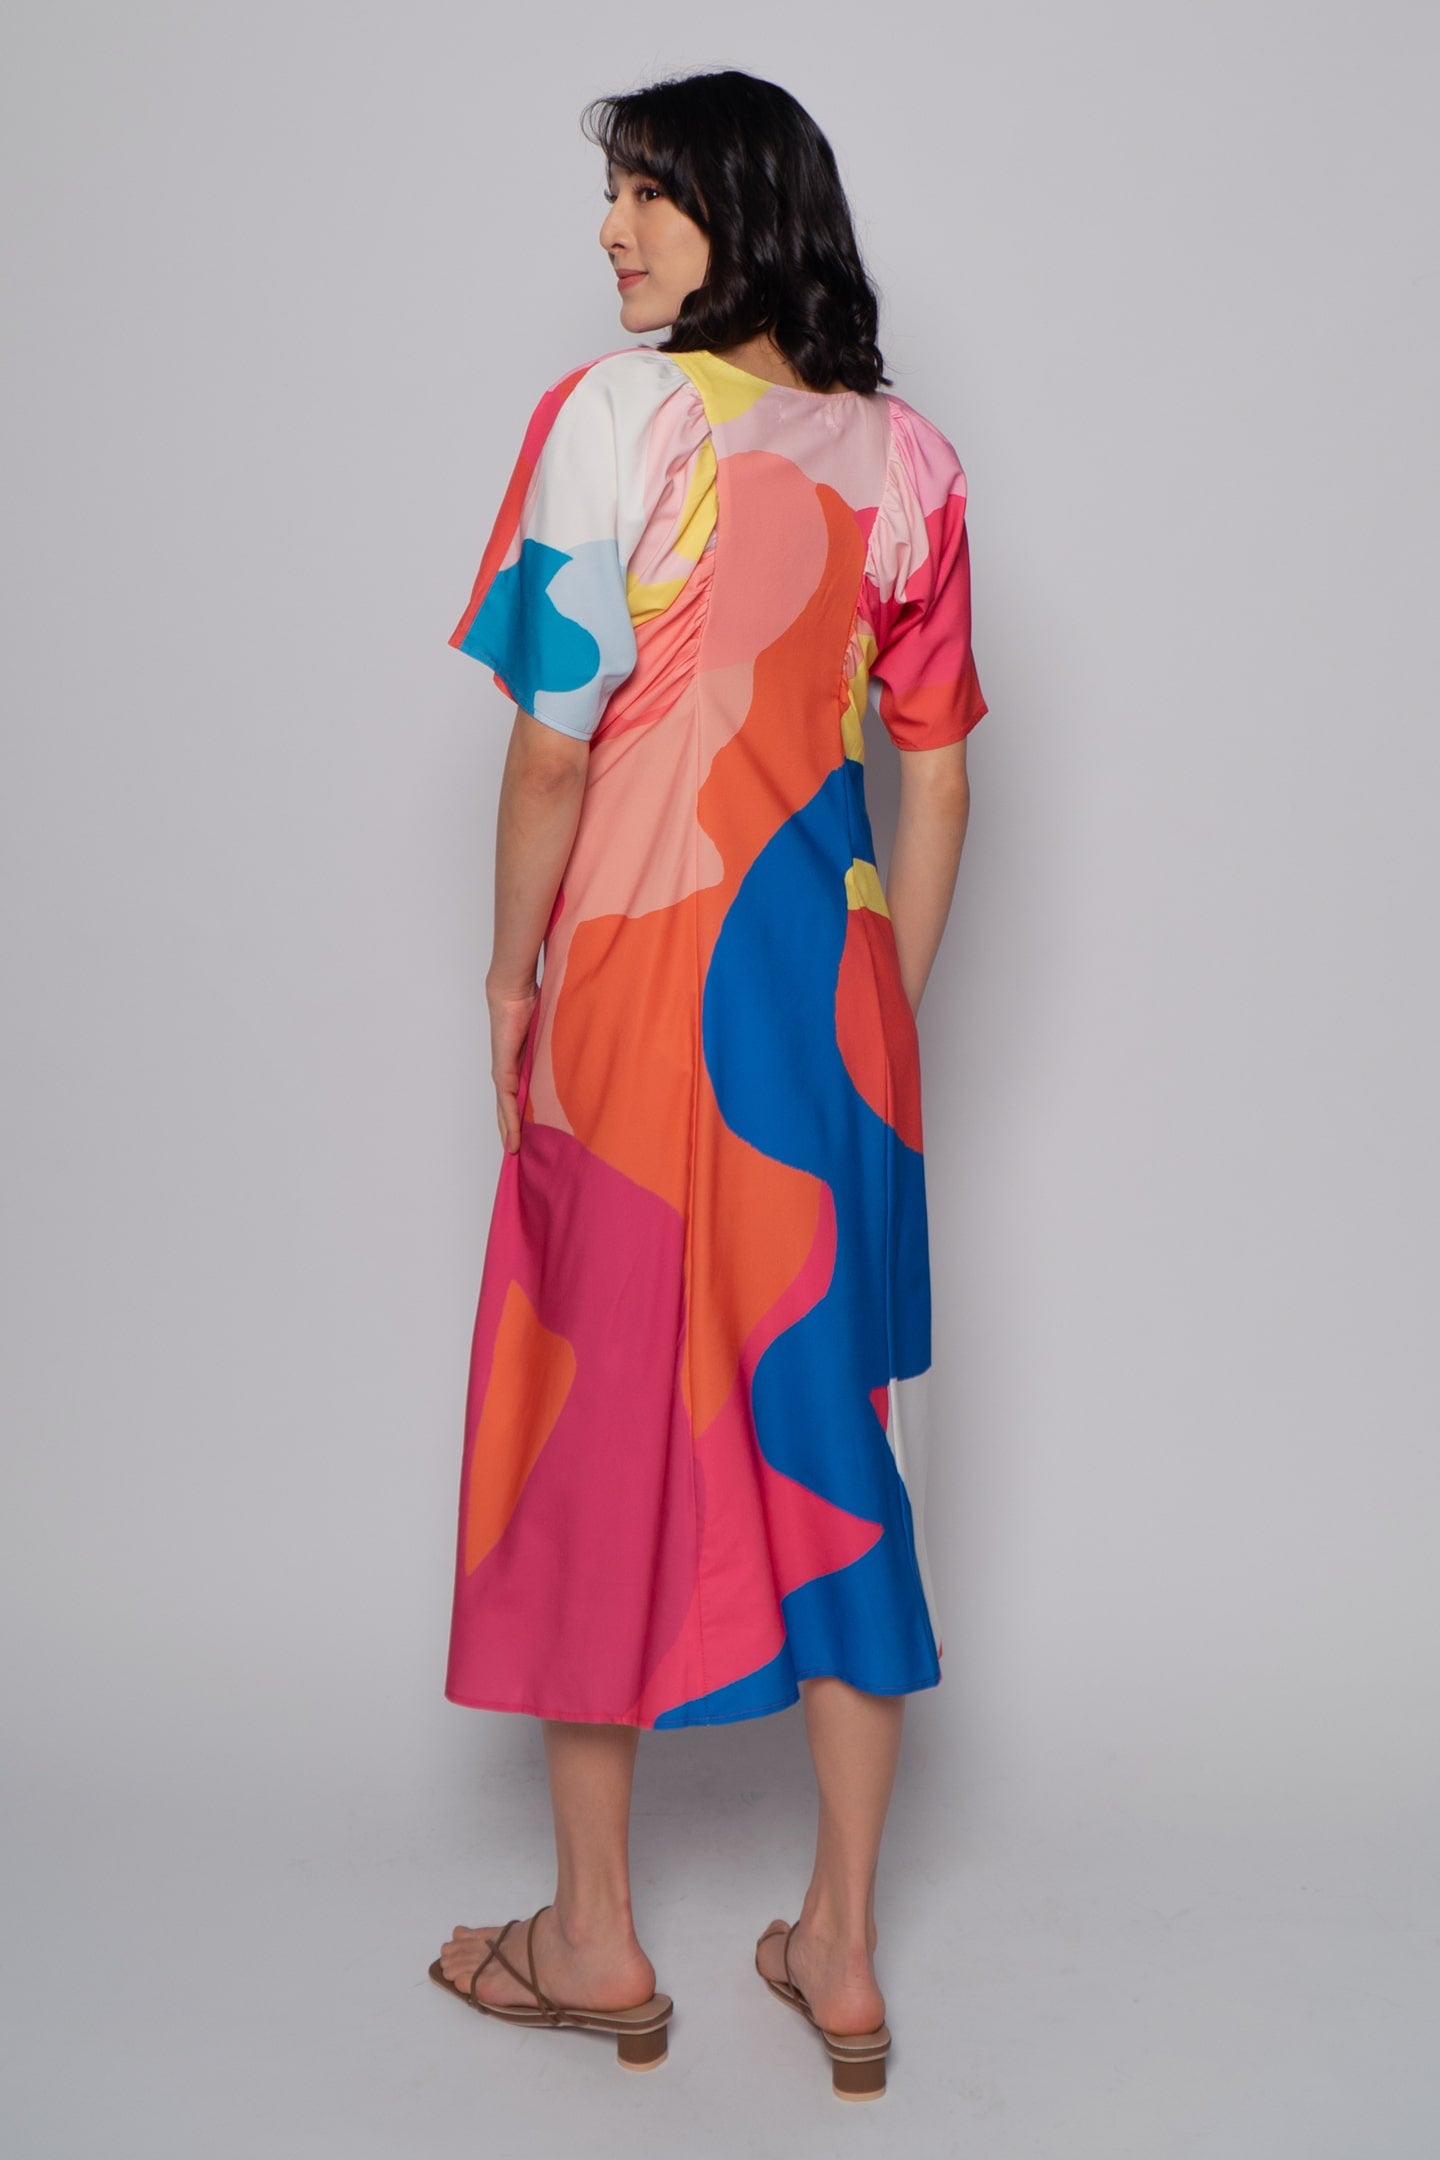 Whitney V Dress in Whirlwind Palette